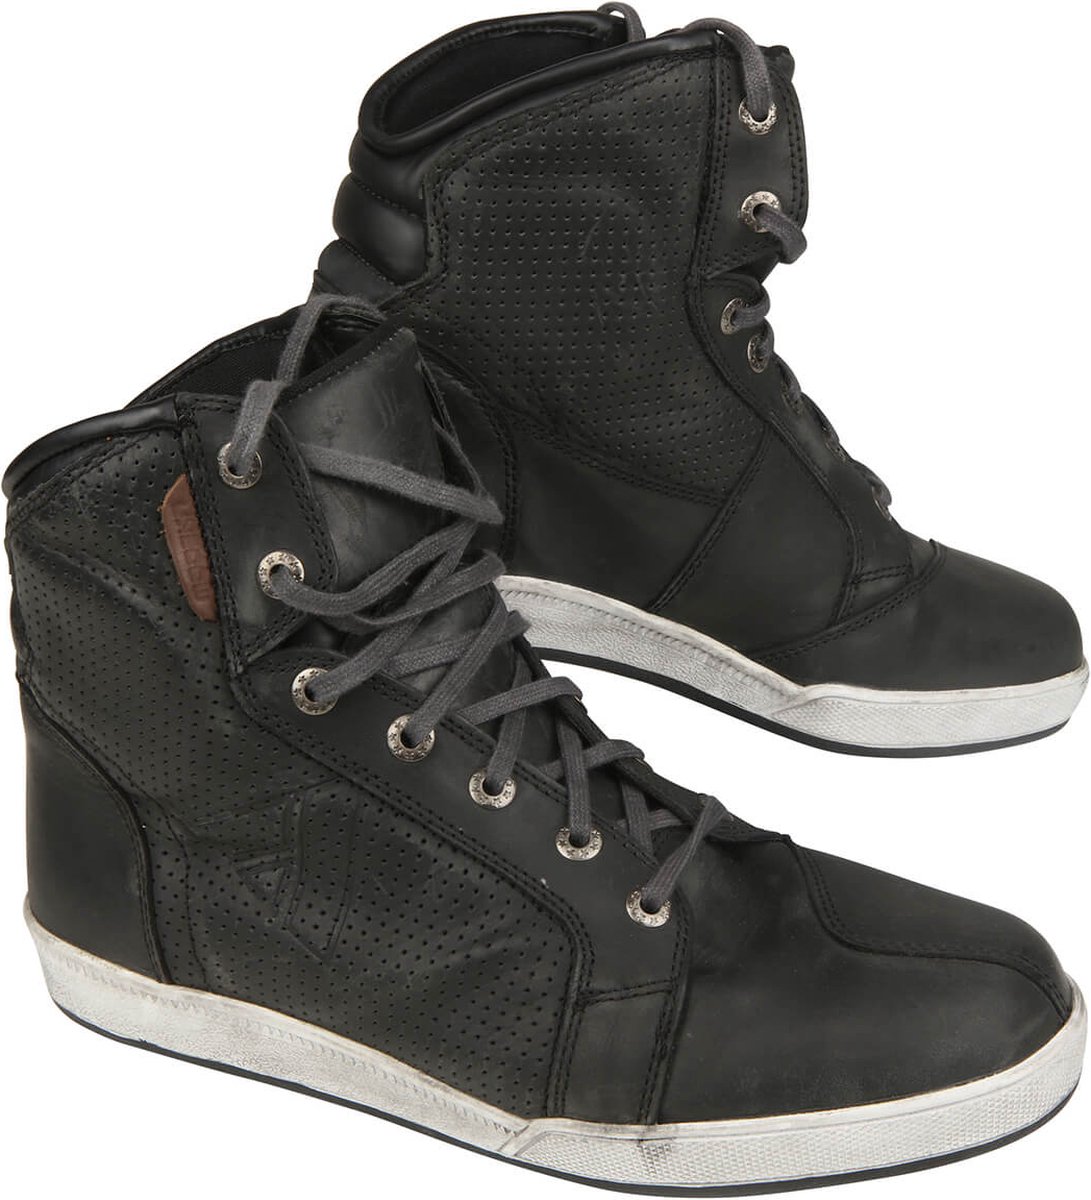 Modeka Midtown Sneakers Grey 40